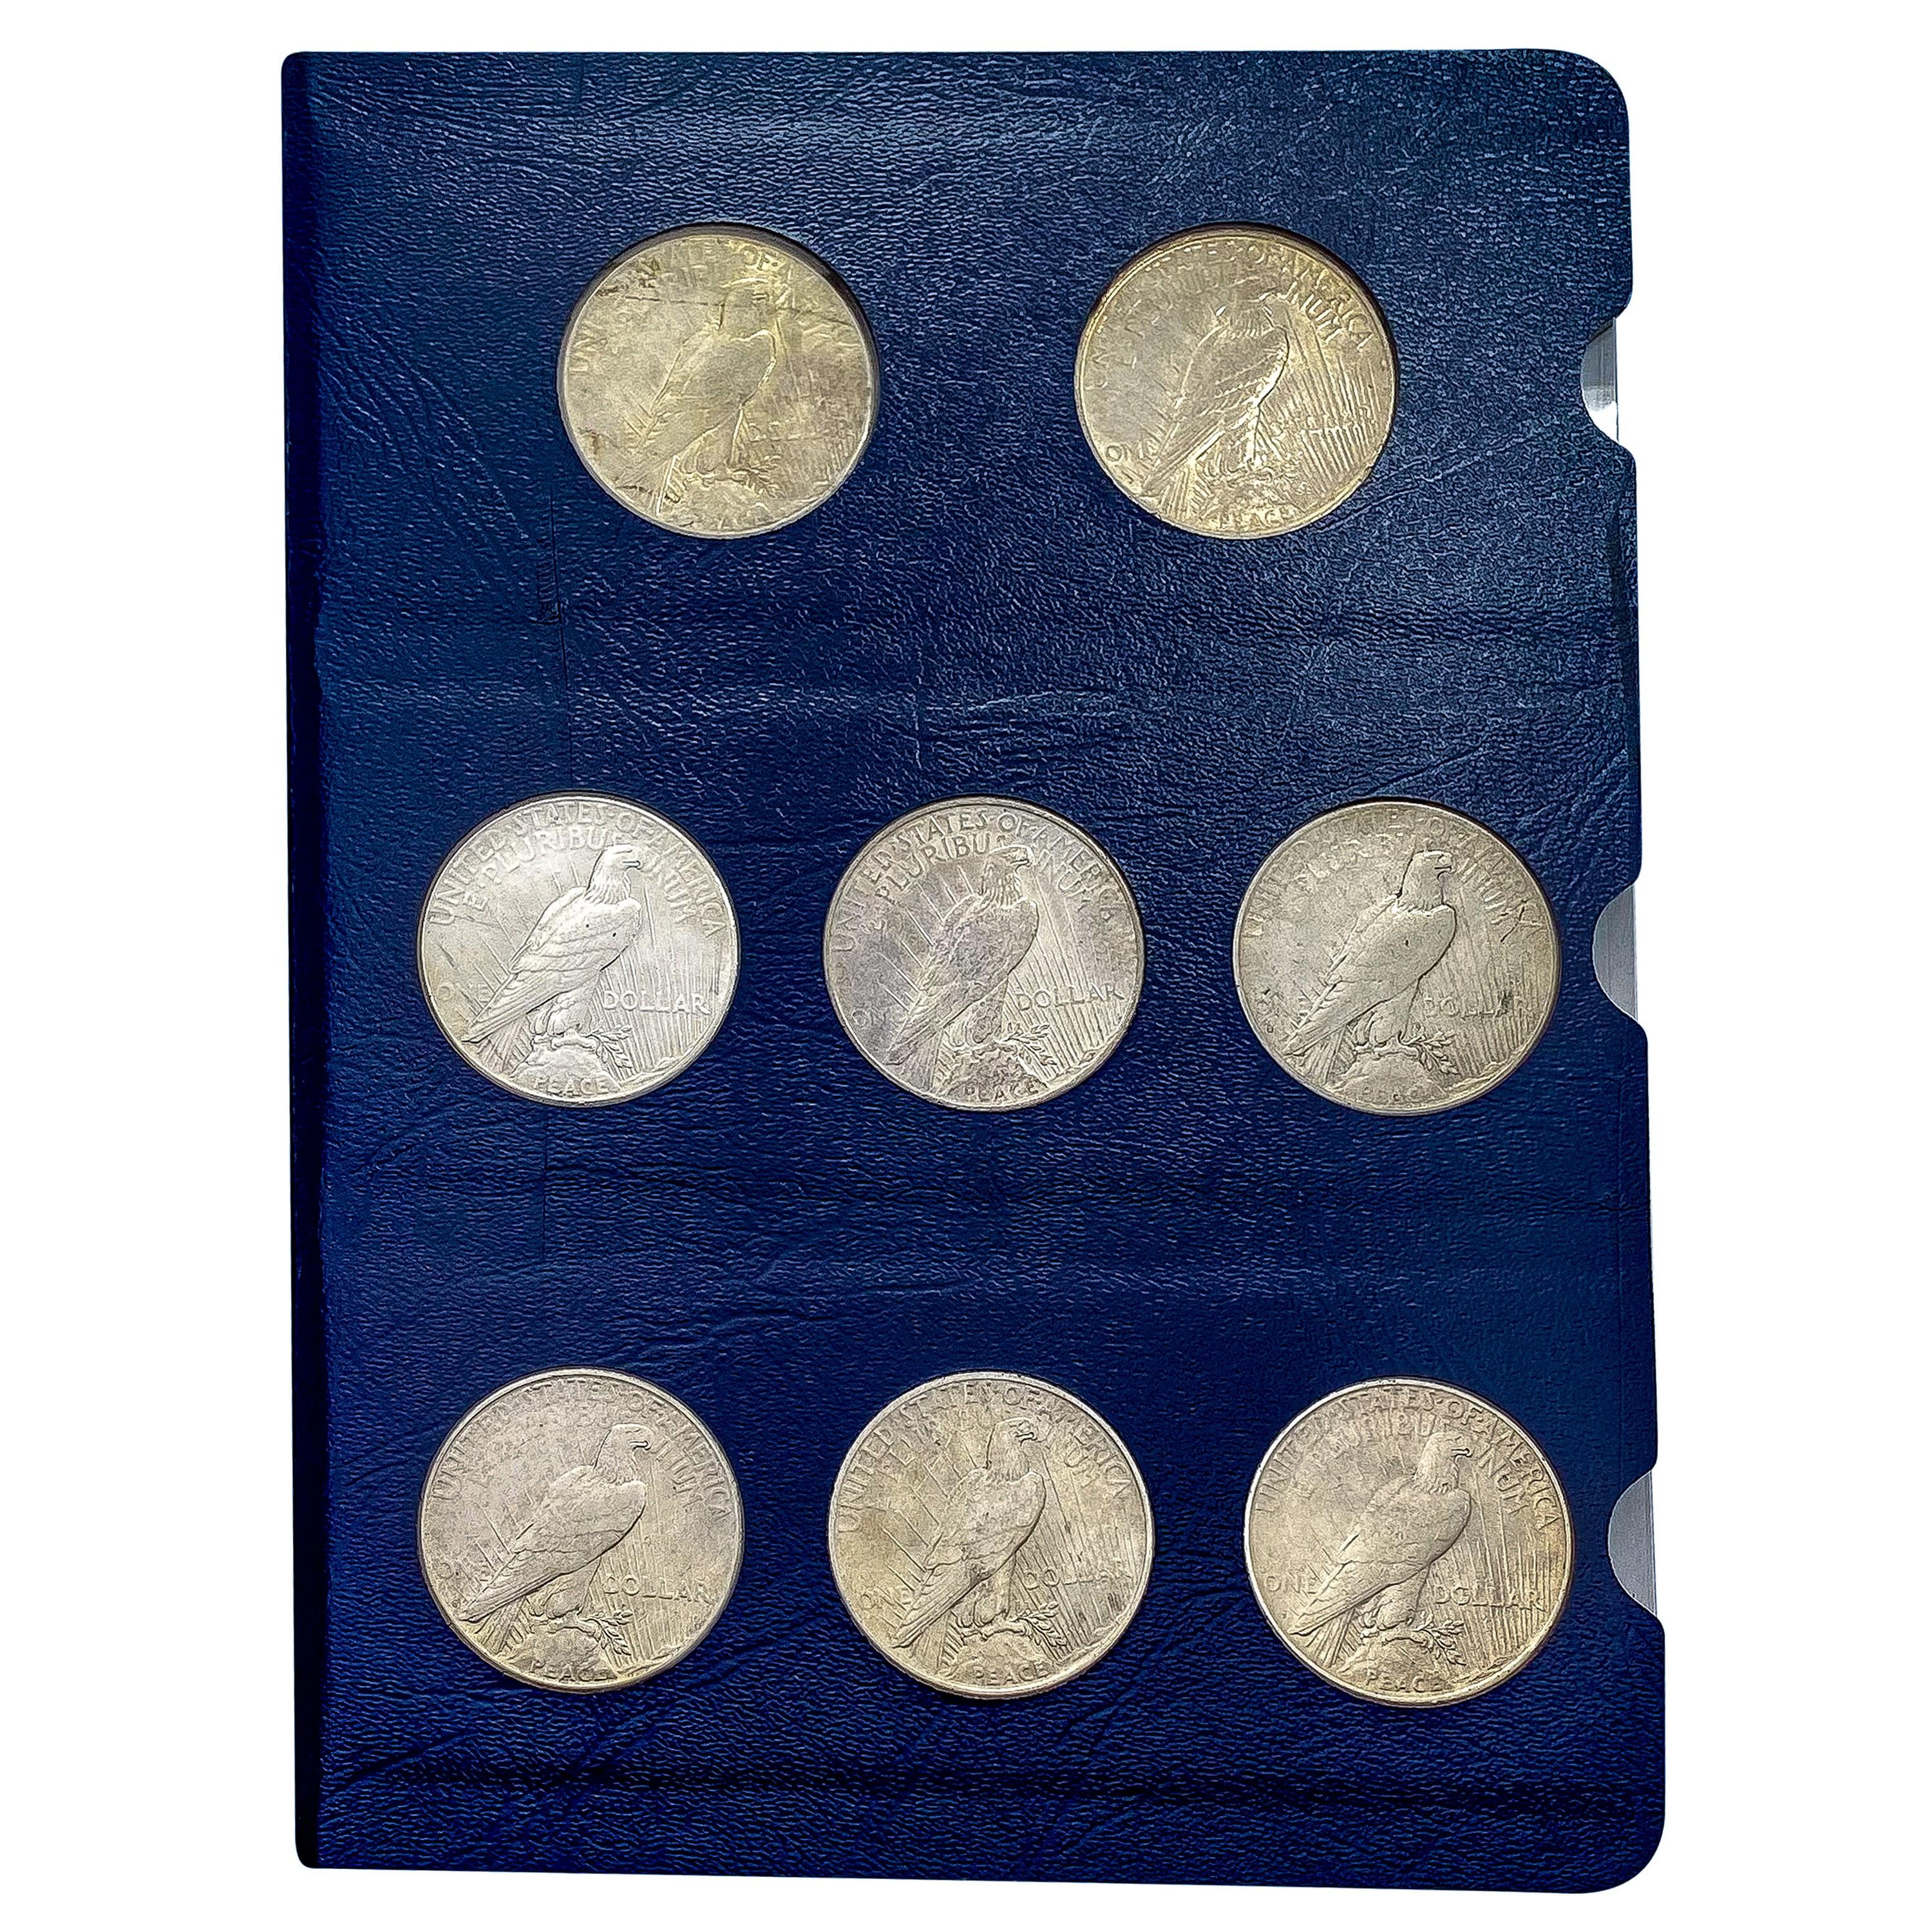 1921-1935 Peace Dollar Album [24 Coins[